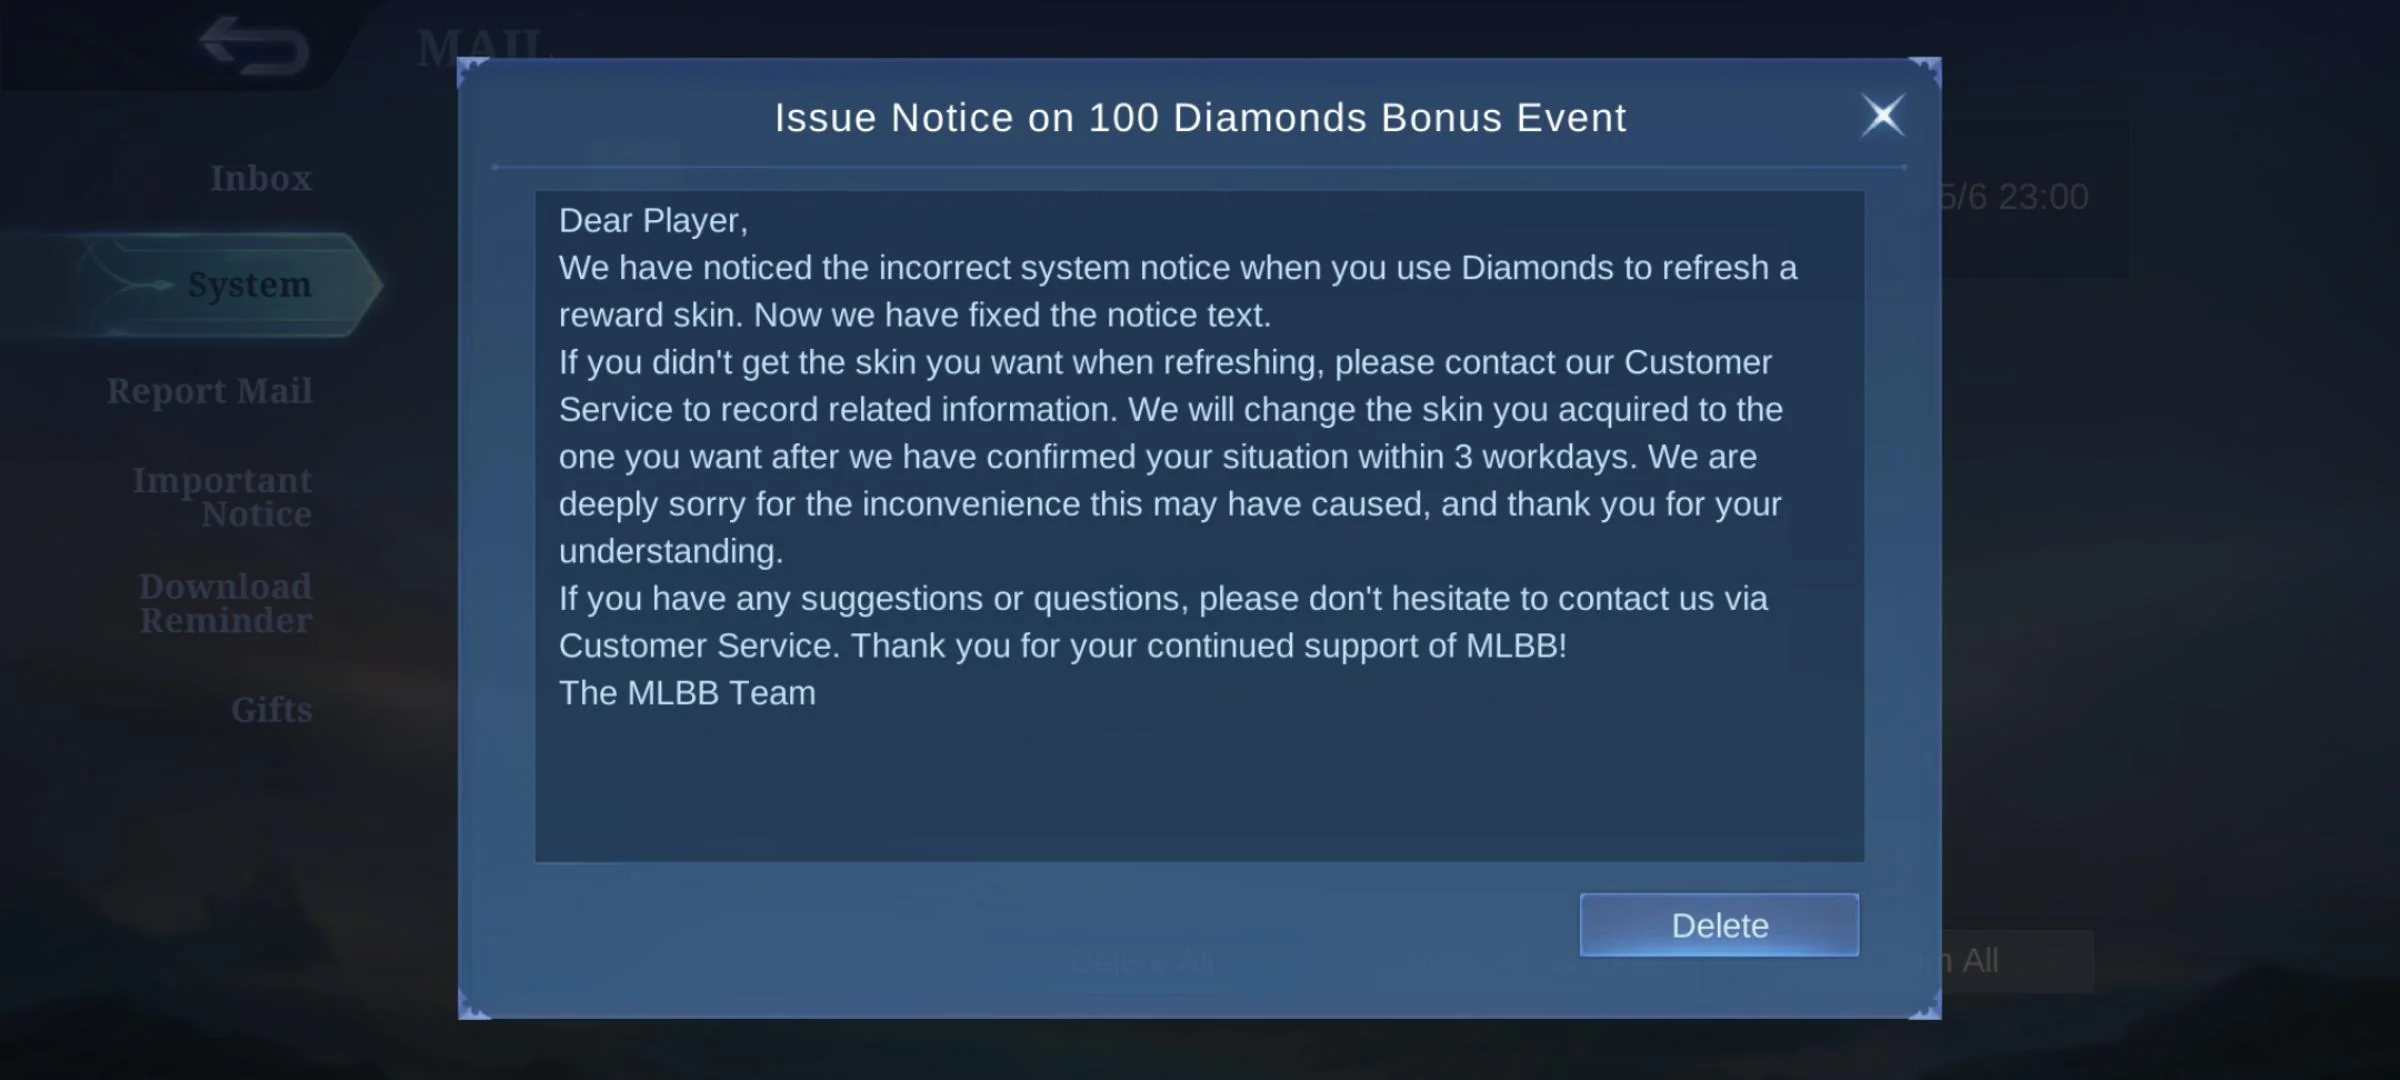 Issue Notice on 100 Diamonds Bonus Event